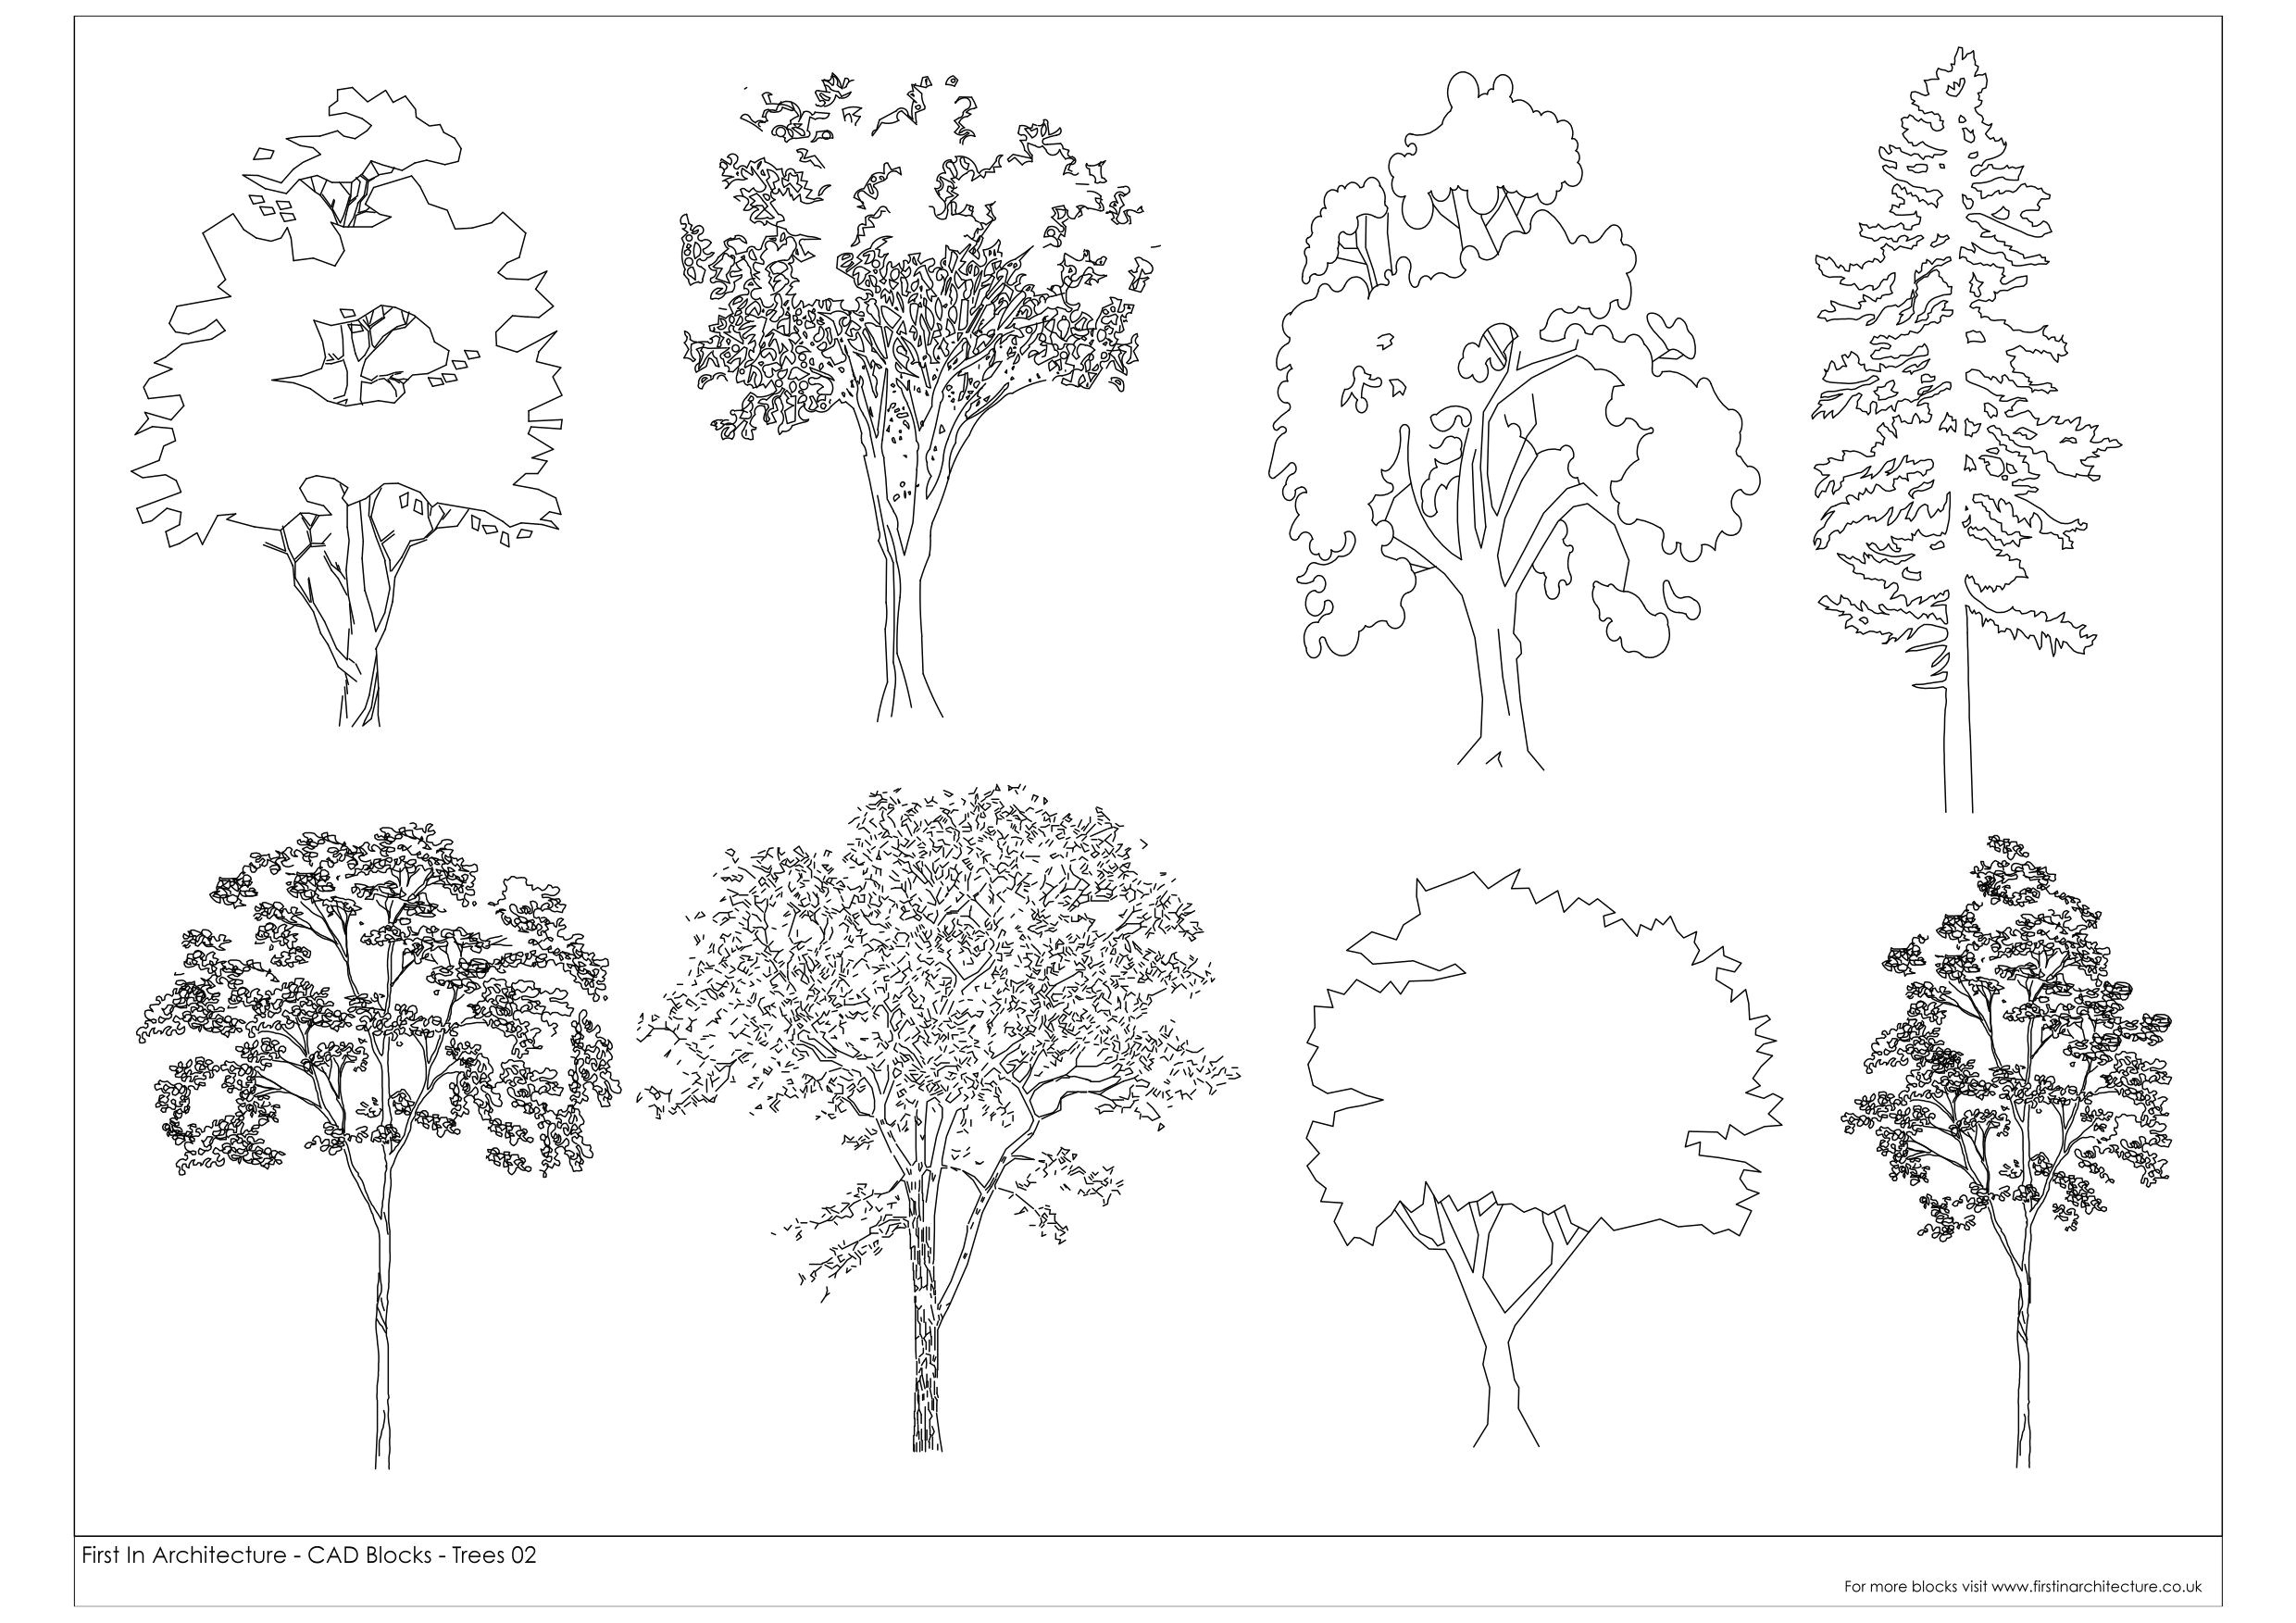 Drawing 02 02 Free Cad Blocks Trees 02 Sketch Pinterest Cad Blocks